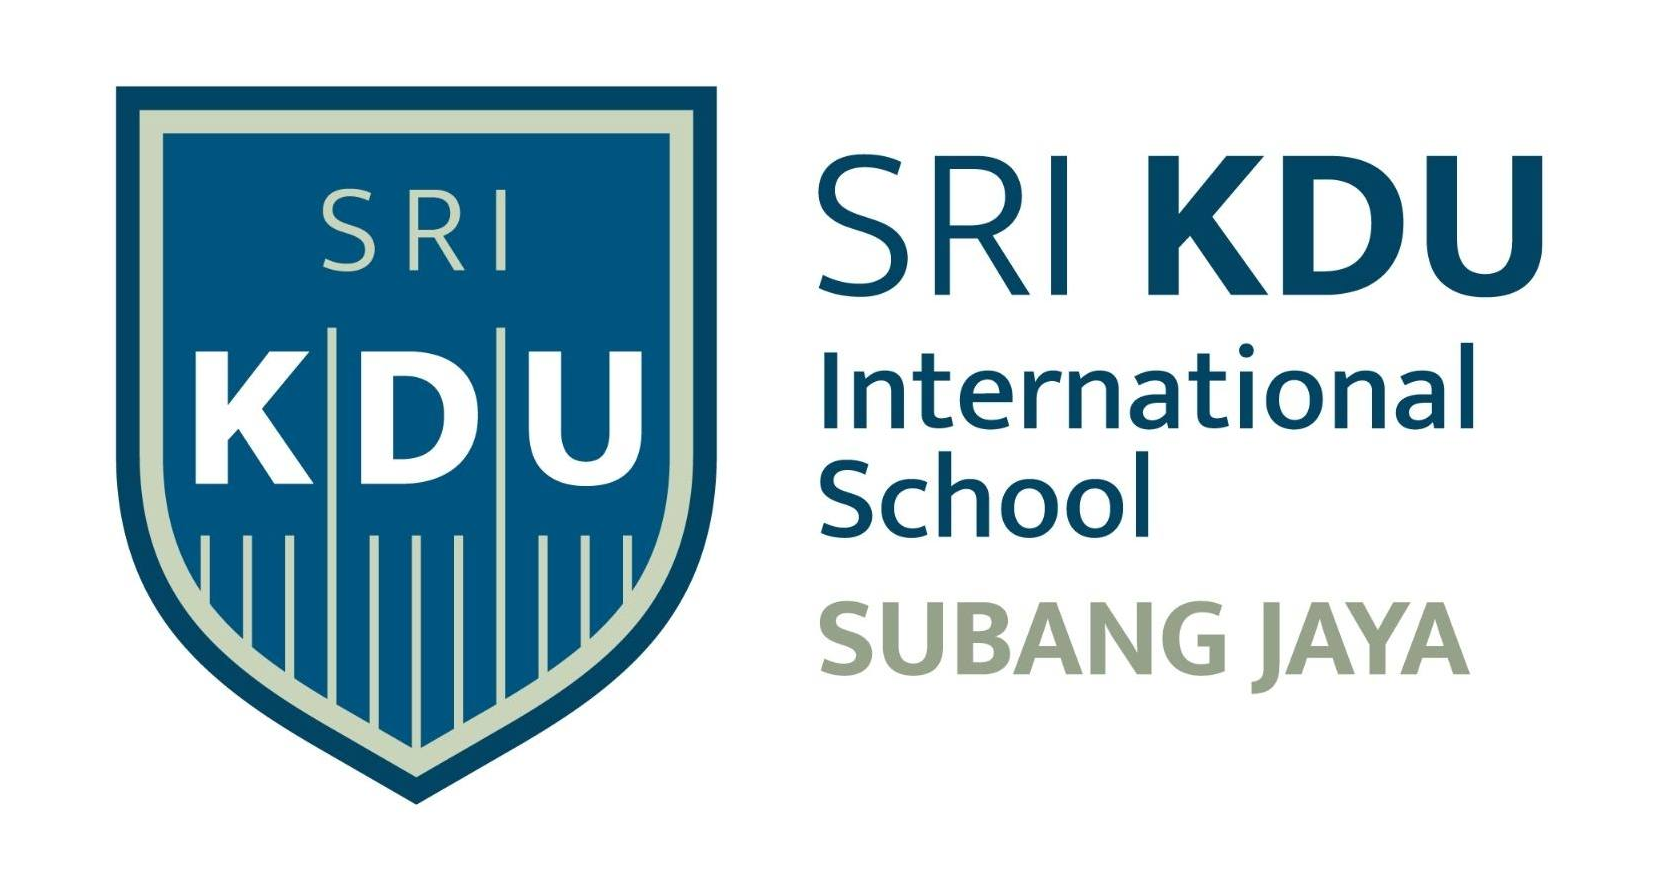 Sri KDU International School Subang Jaya